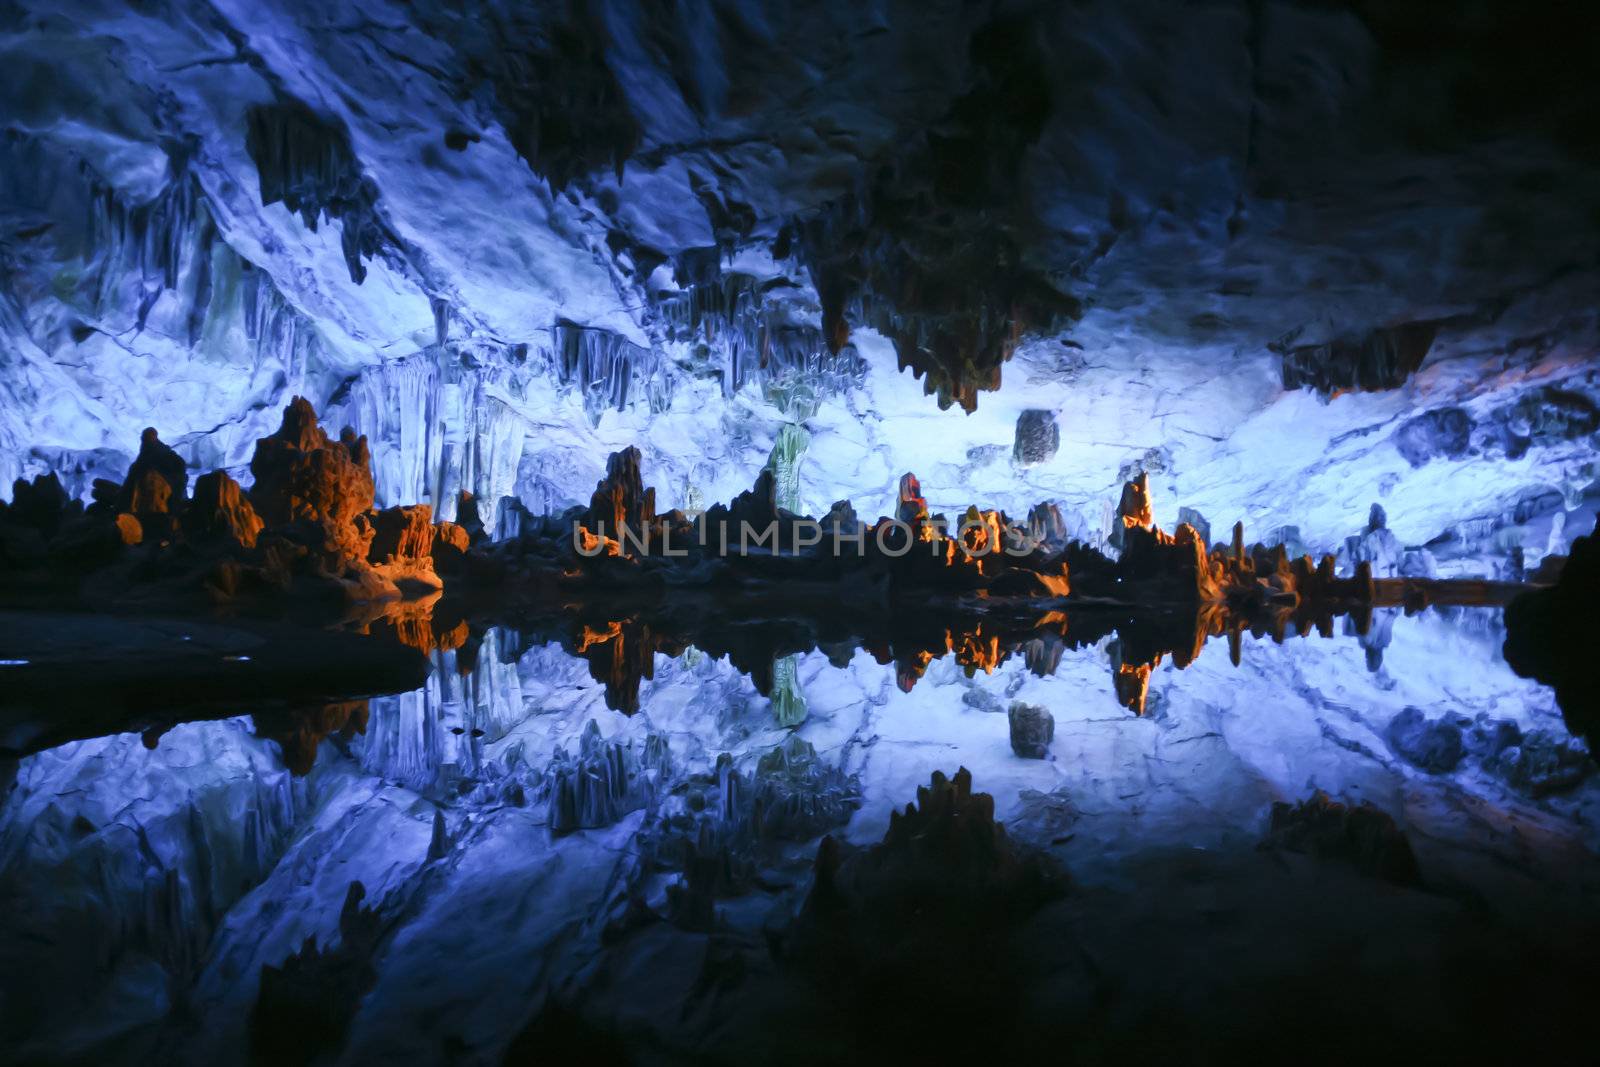 Underground lake in the Reed Flute Cave (Lu Di Yan) near Guilin in China